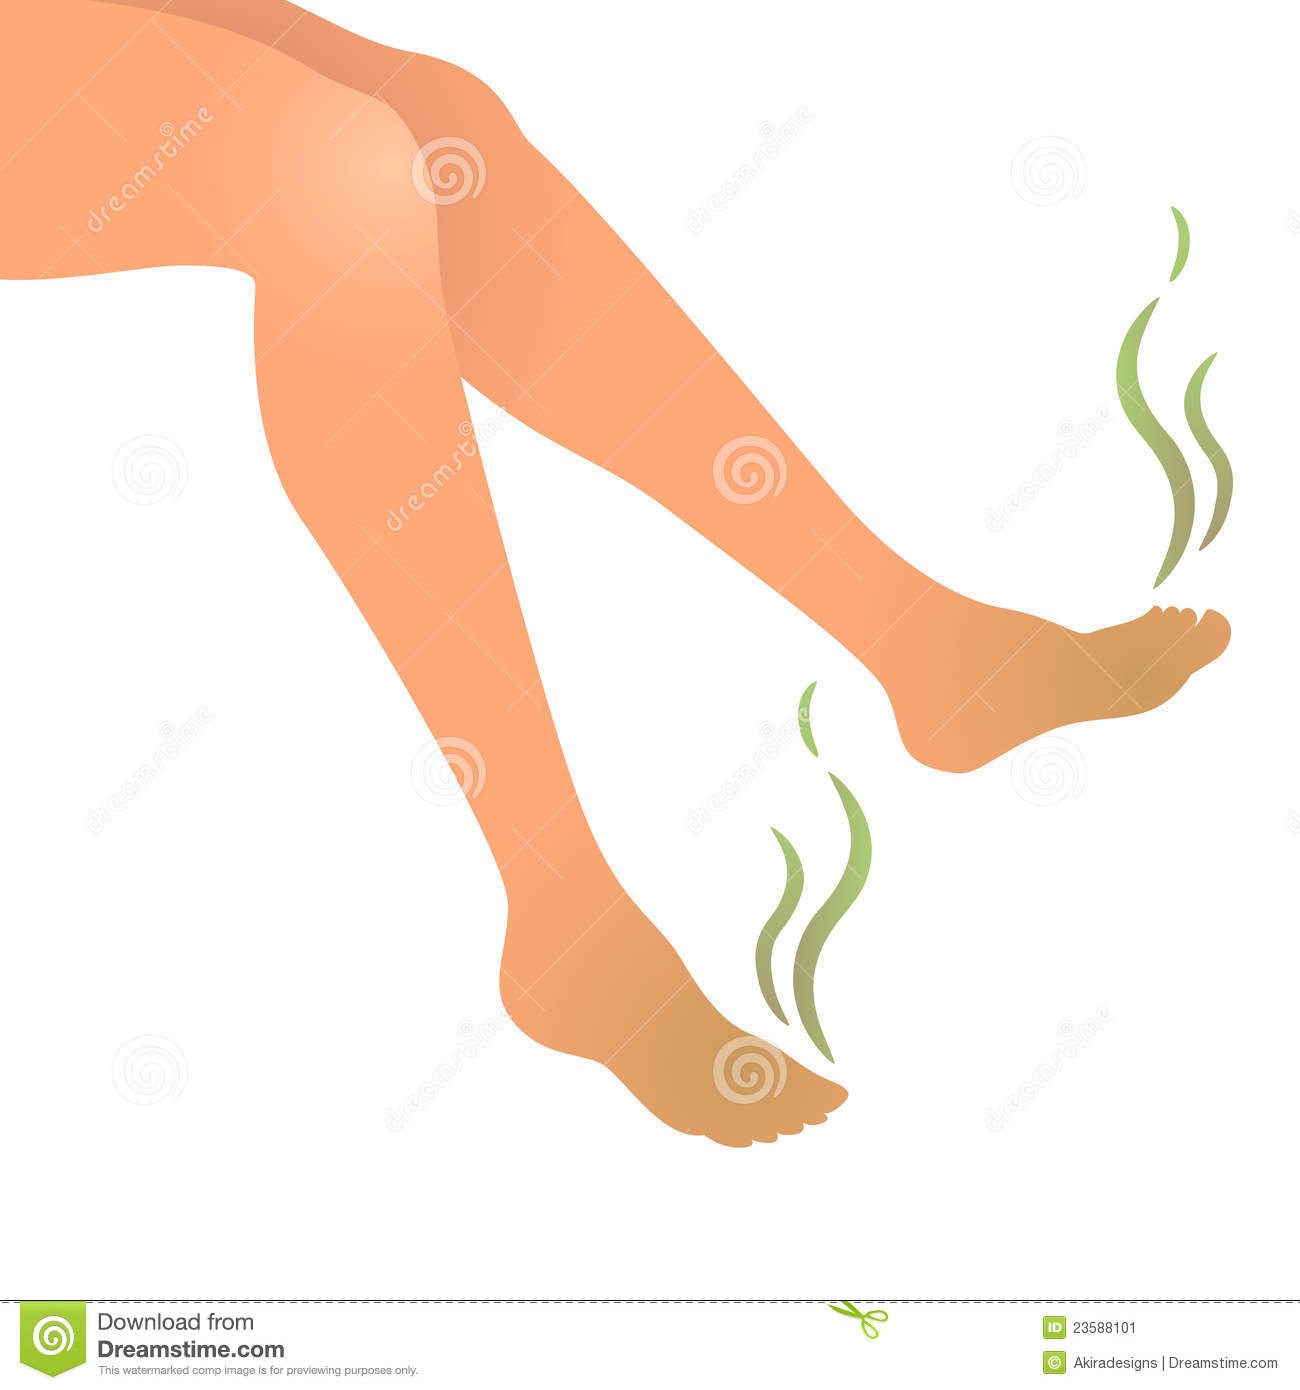 Smelly Stinky Feet Odor Stock Image   Image  23588101